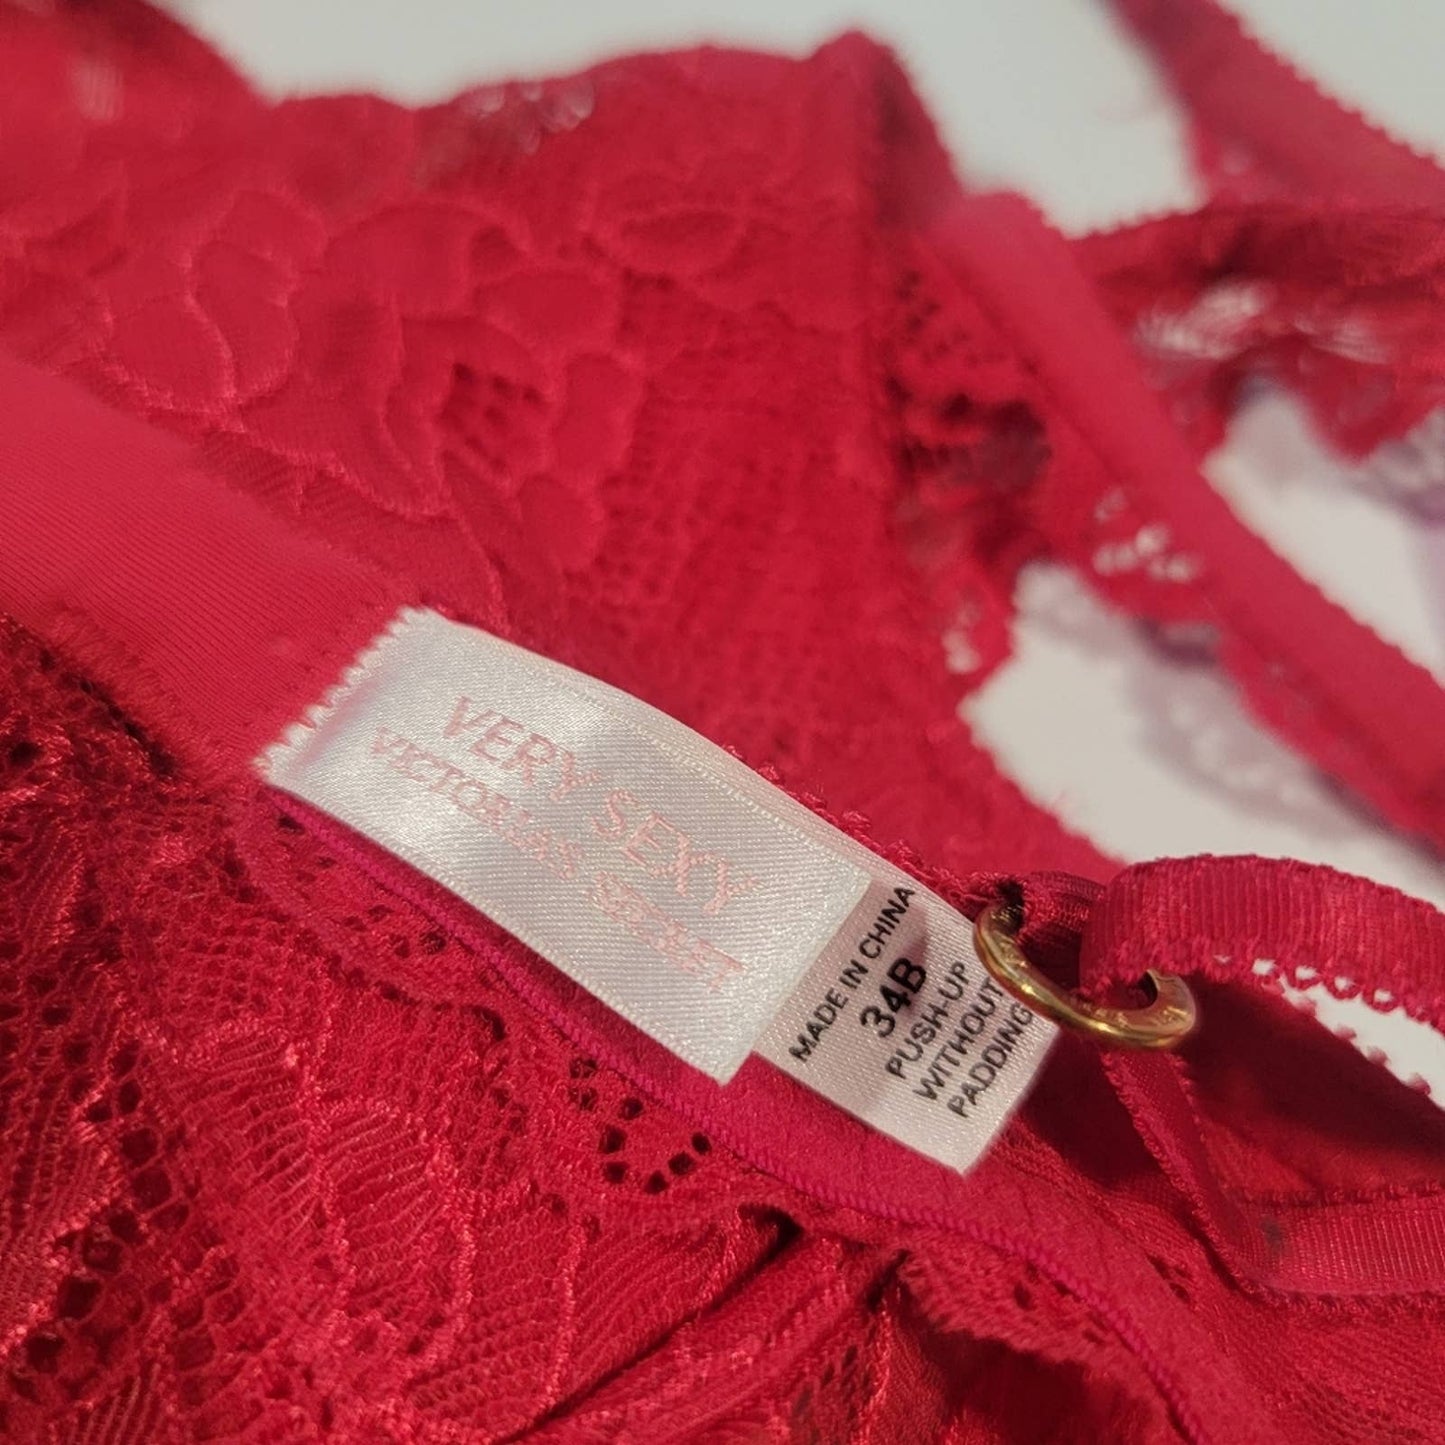 Victoria’s Secret Very Sexy Red Push Up Lace Bra - 34B